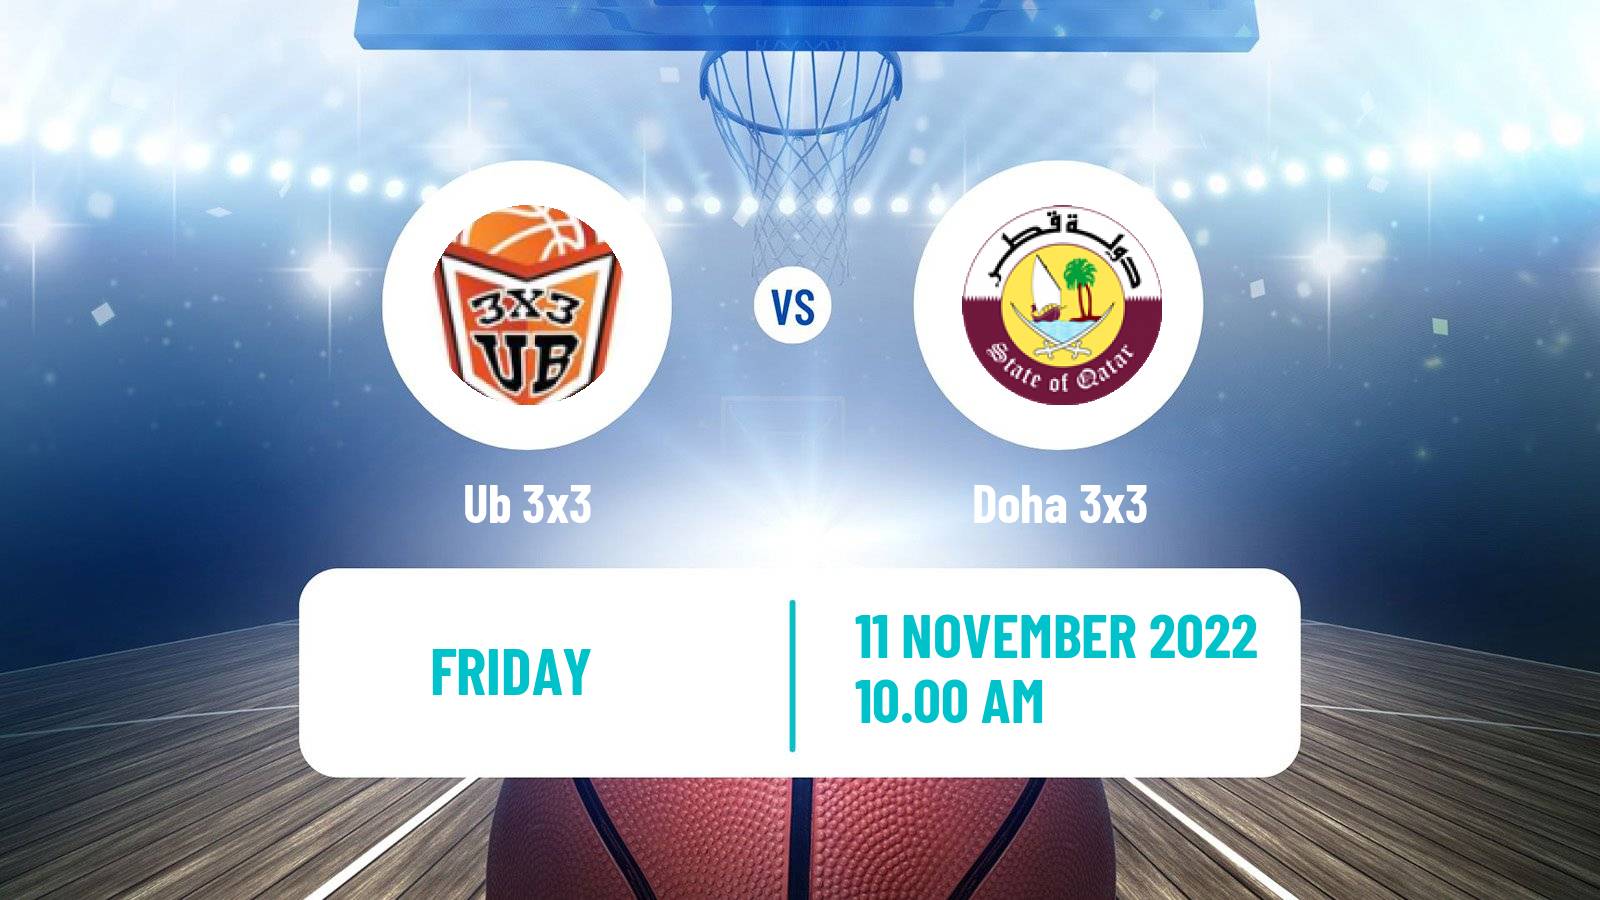 Basketball World Tour Riyadh 3x3 Ub 3x3 - Doha 3x3